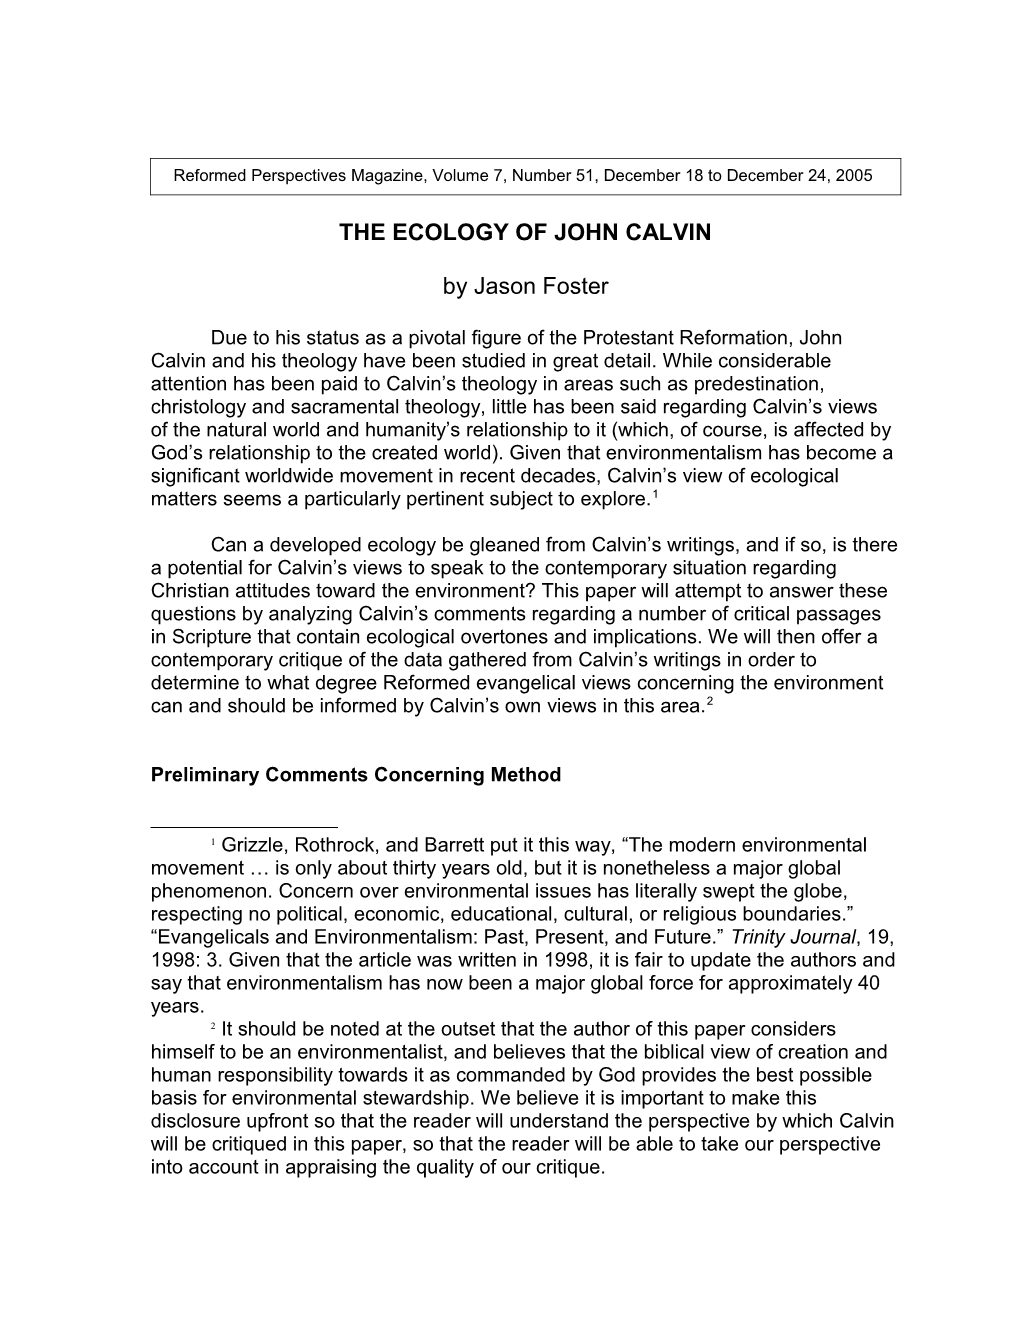 The Ecology of John Calvin